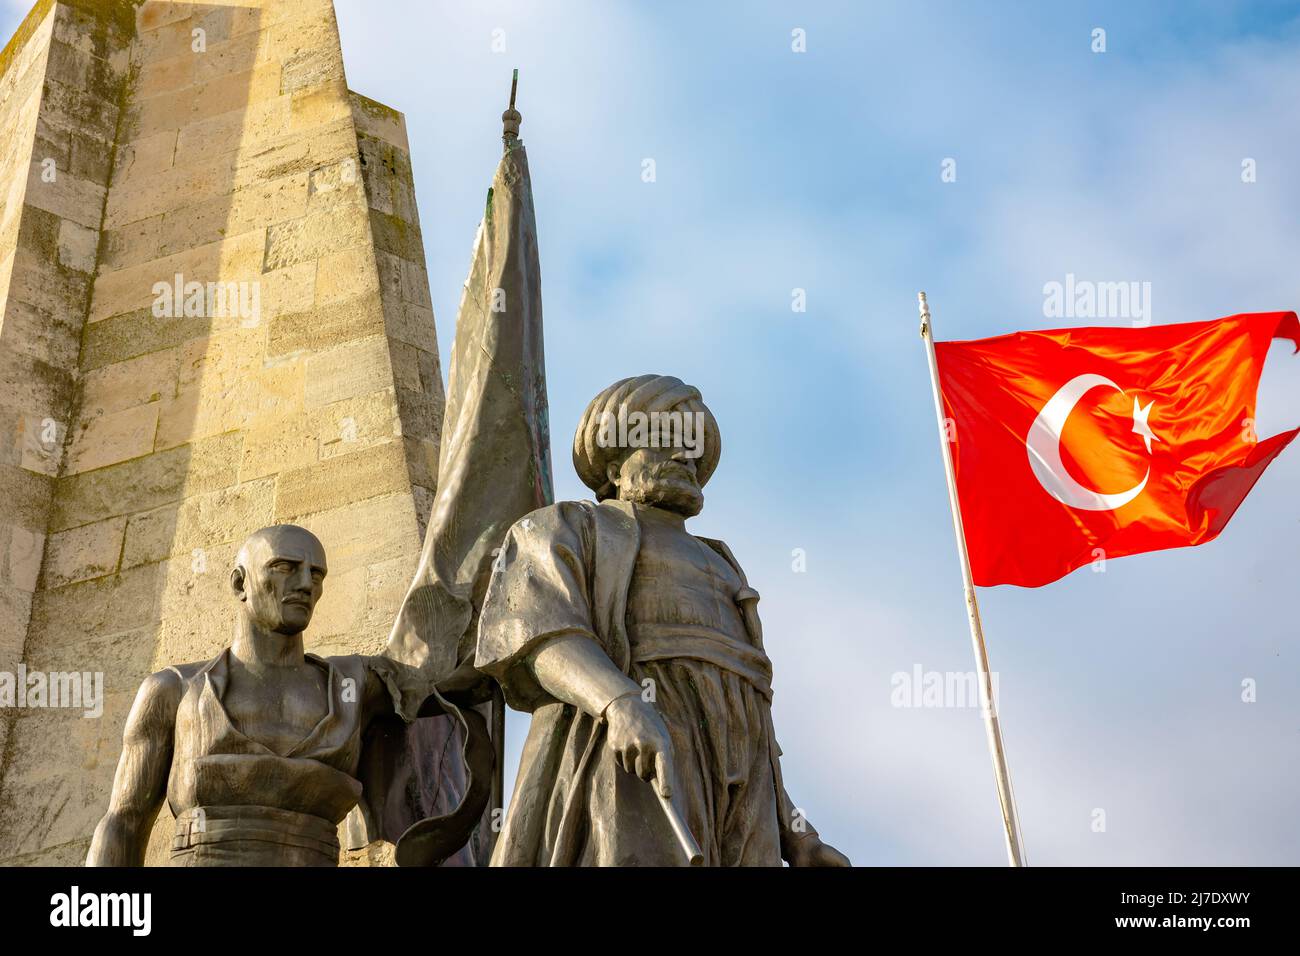 Monumento di Barbaros Hayreddin Pasa a Besiktas Istanbul. Statua di Barbarossa o Barbaros Hayrettin Pasha con bandiera turca. Marina ottomana. Preveze Savas Foto Stock